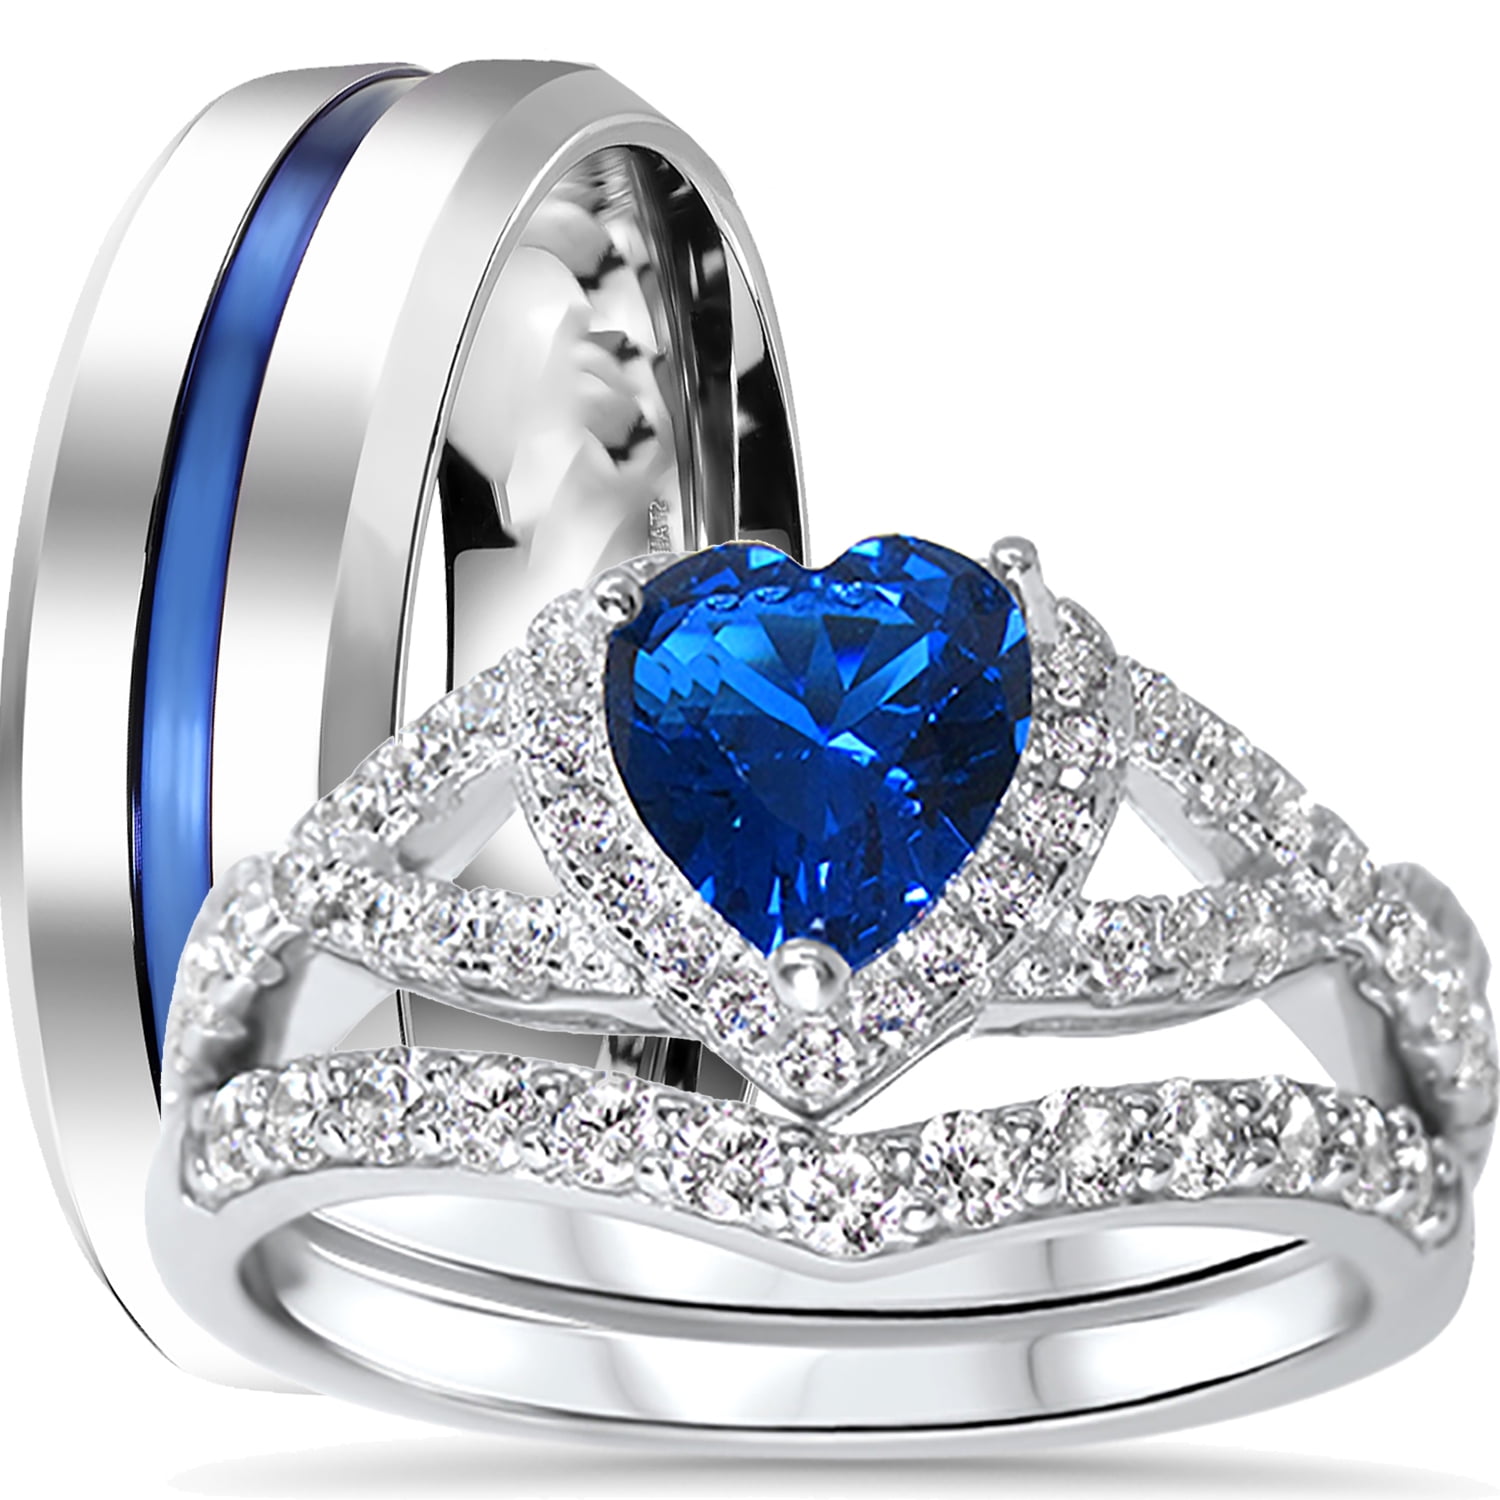 Size 5-15 Wedding Engagement Ring Set Pair Black Sapphire Blue Princess Cut Halo 